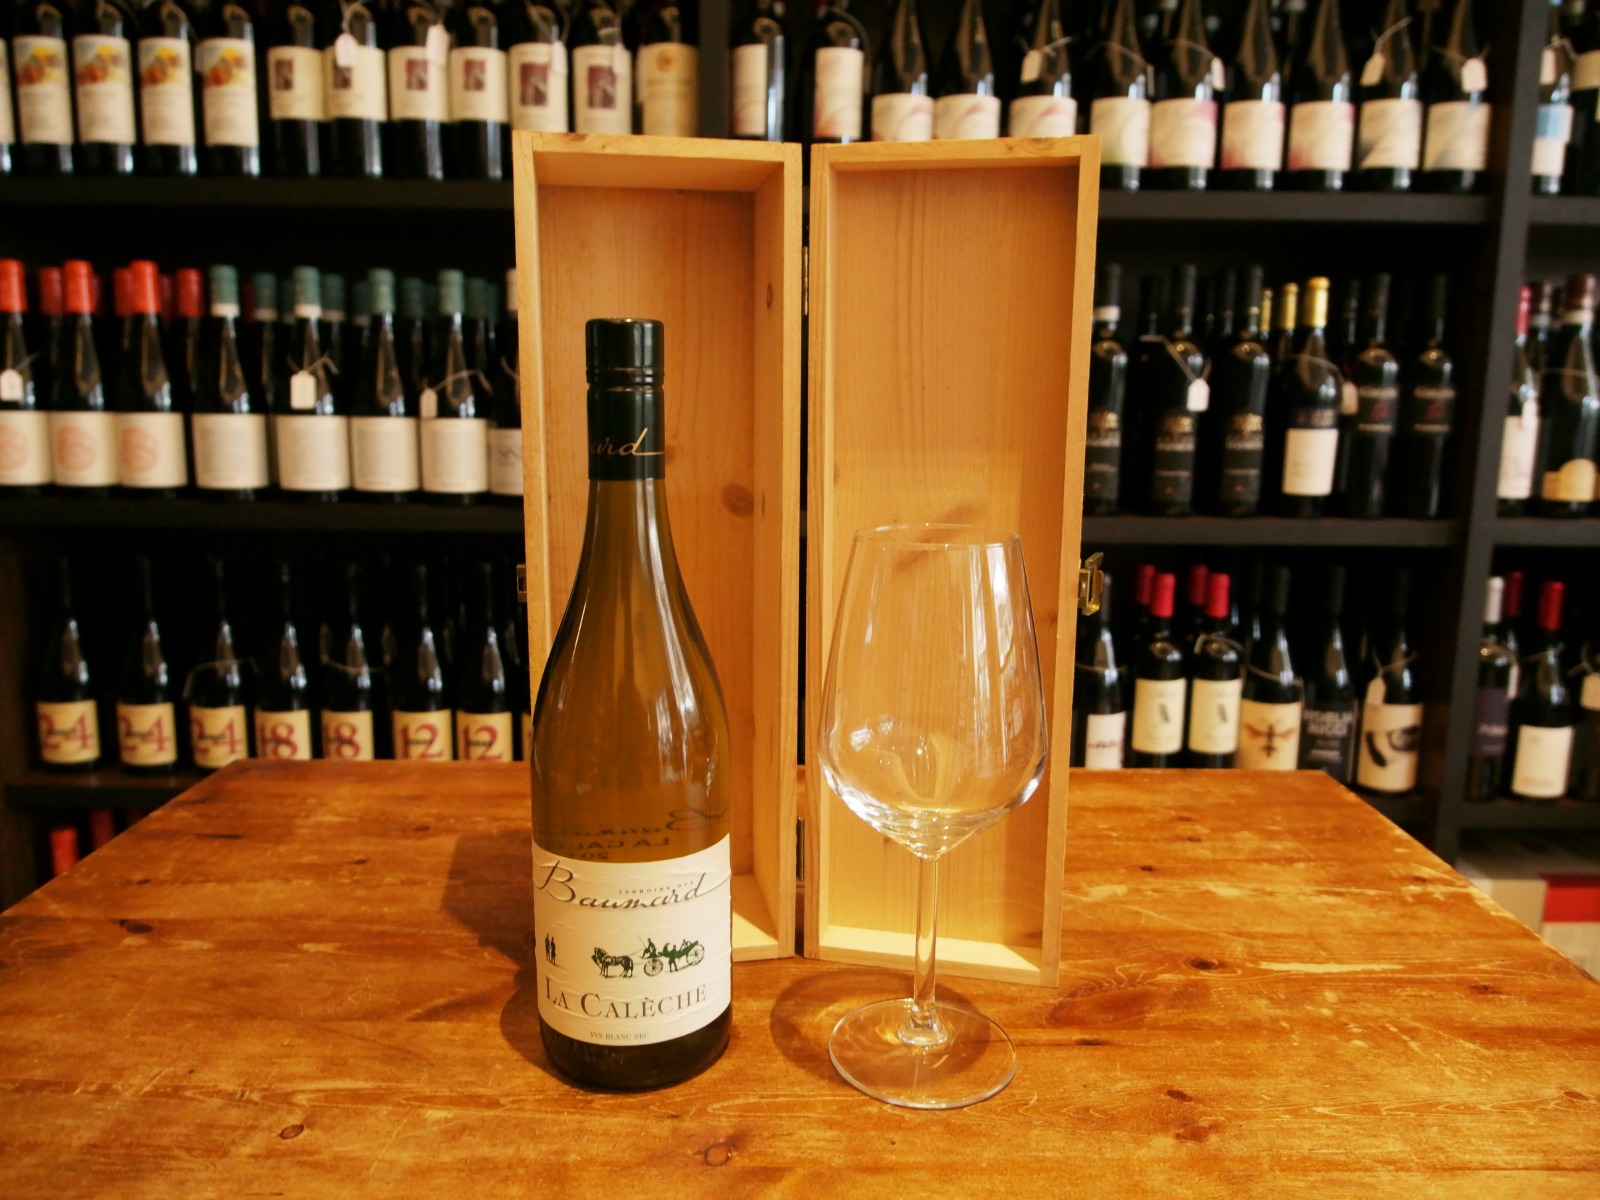 Baumard - "La Calèche" Vin de France